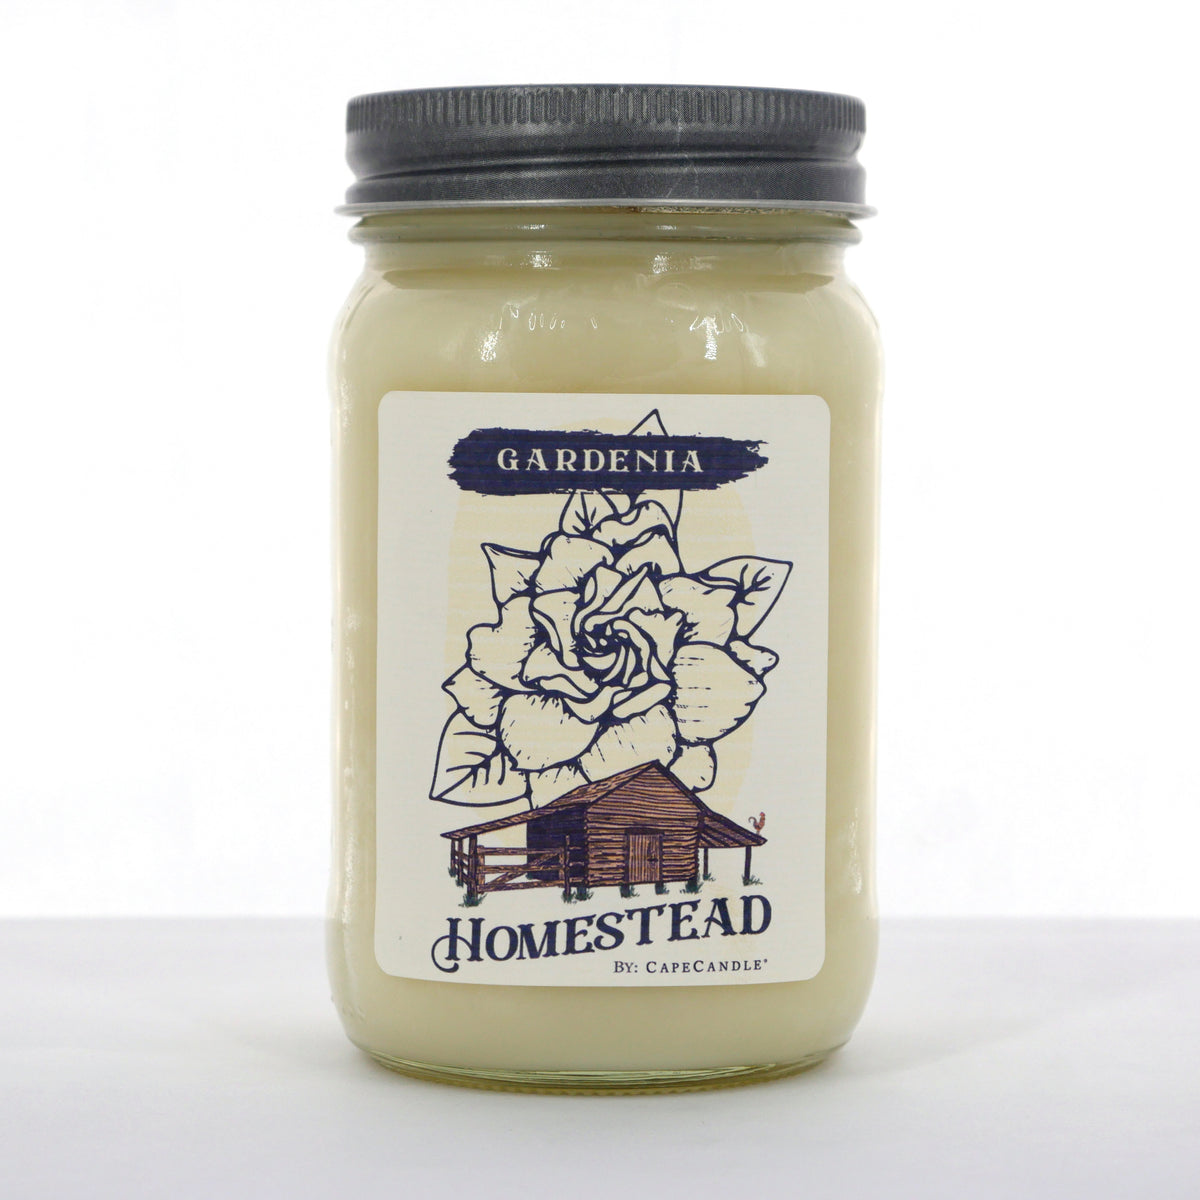 Gardenia Soy Candle 16oz Homestead Mason Jar by Cape Candle